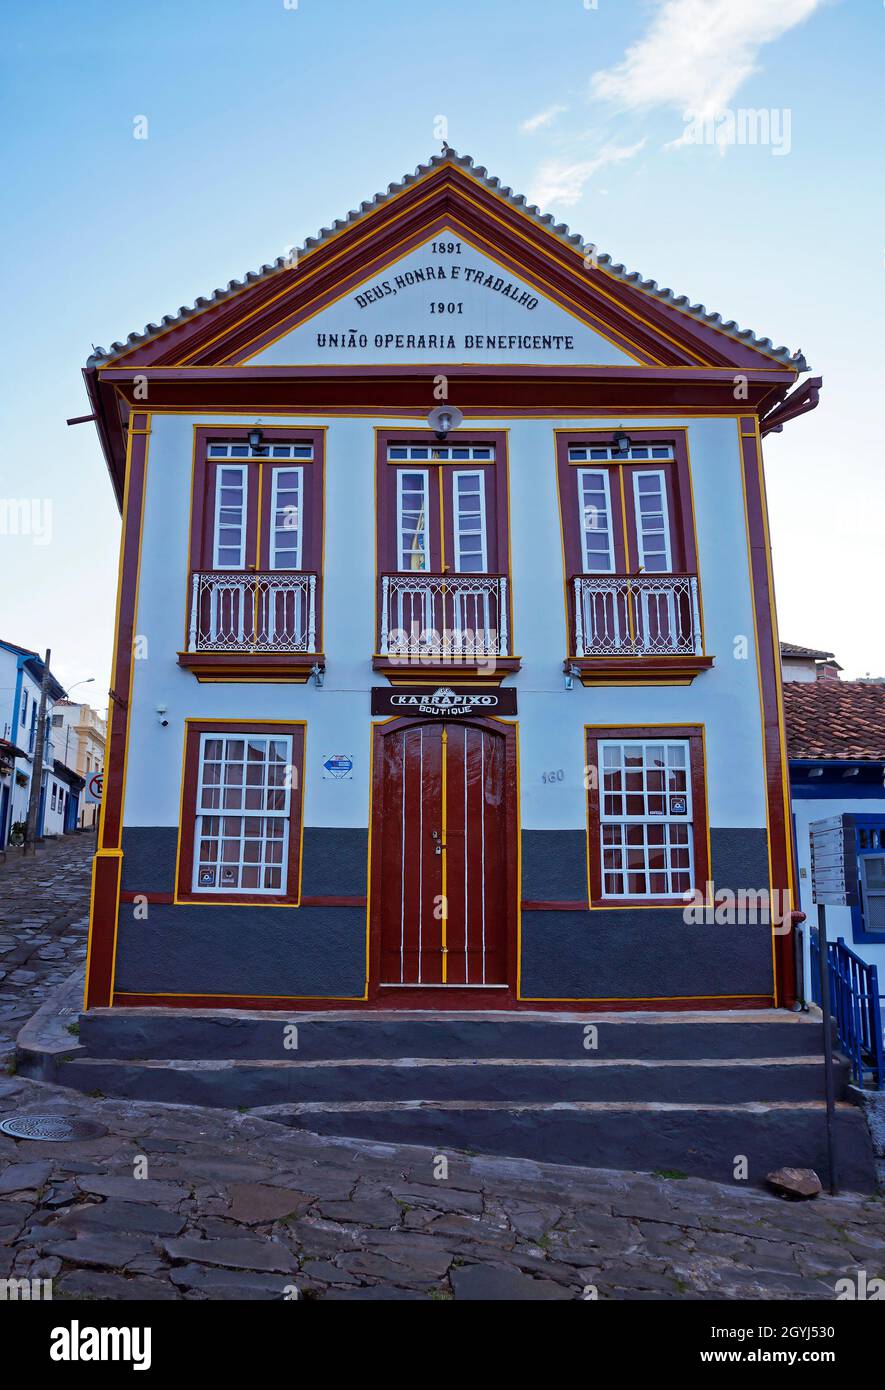 DIAMANTINA, MINAS GERAIS, BRASILE - 20 GENNAIO 2019: Facciata coloniale nel centro storico Foto Stock